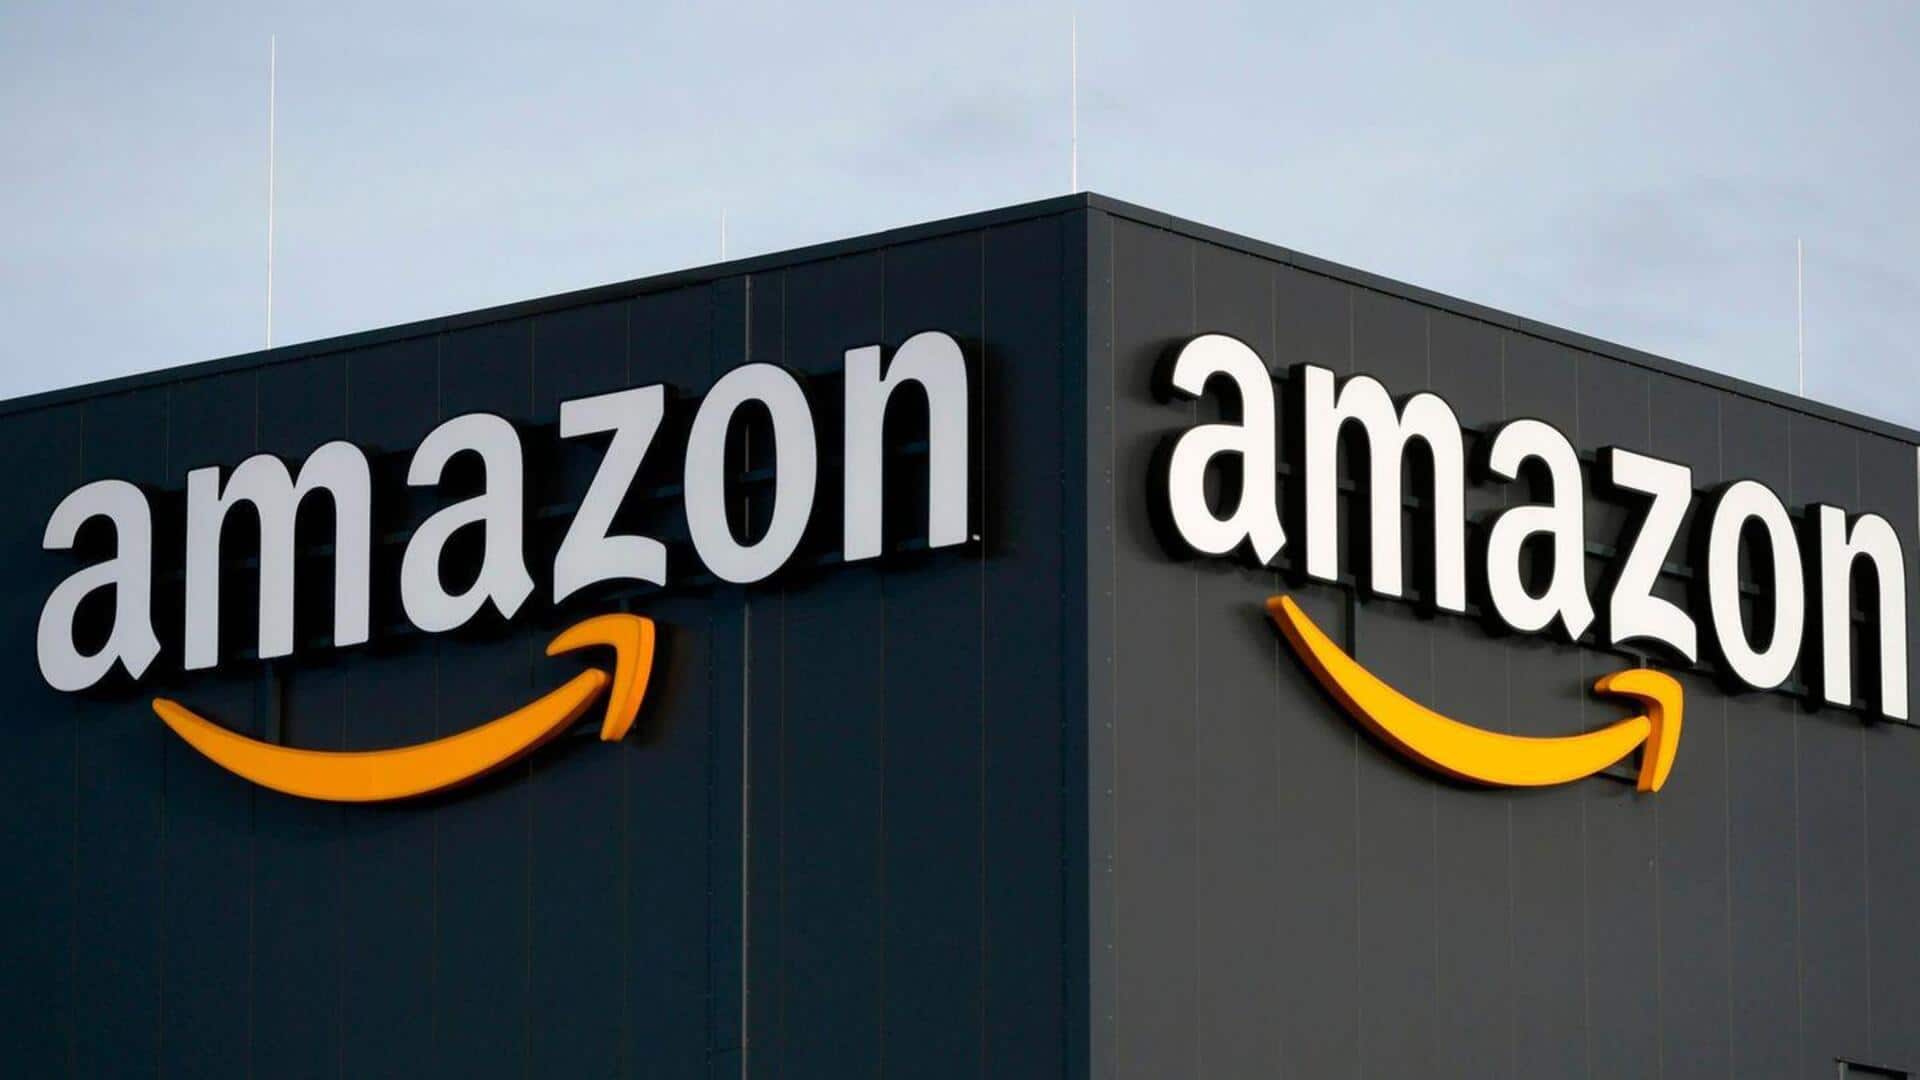 France fines Amazon $35 million for excessive worker surveillance